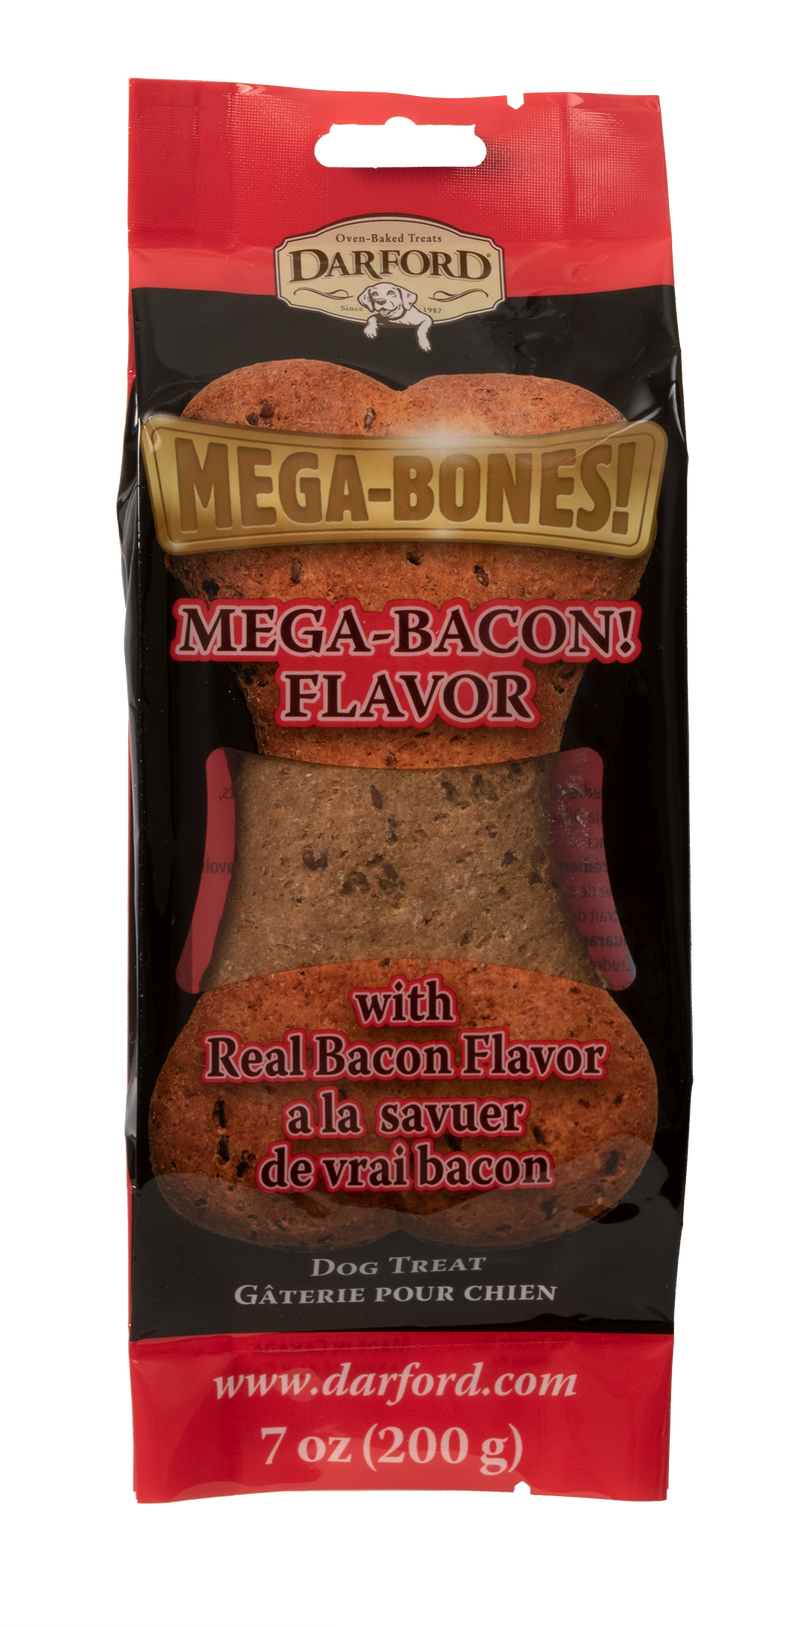 Darford Mega-Bacon! Flavor 7oz